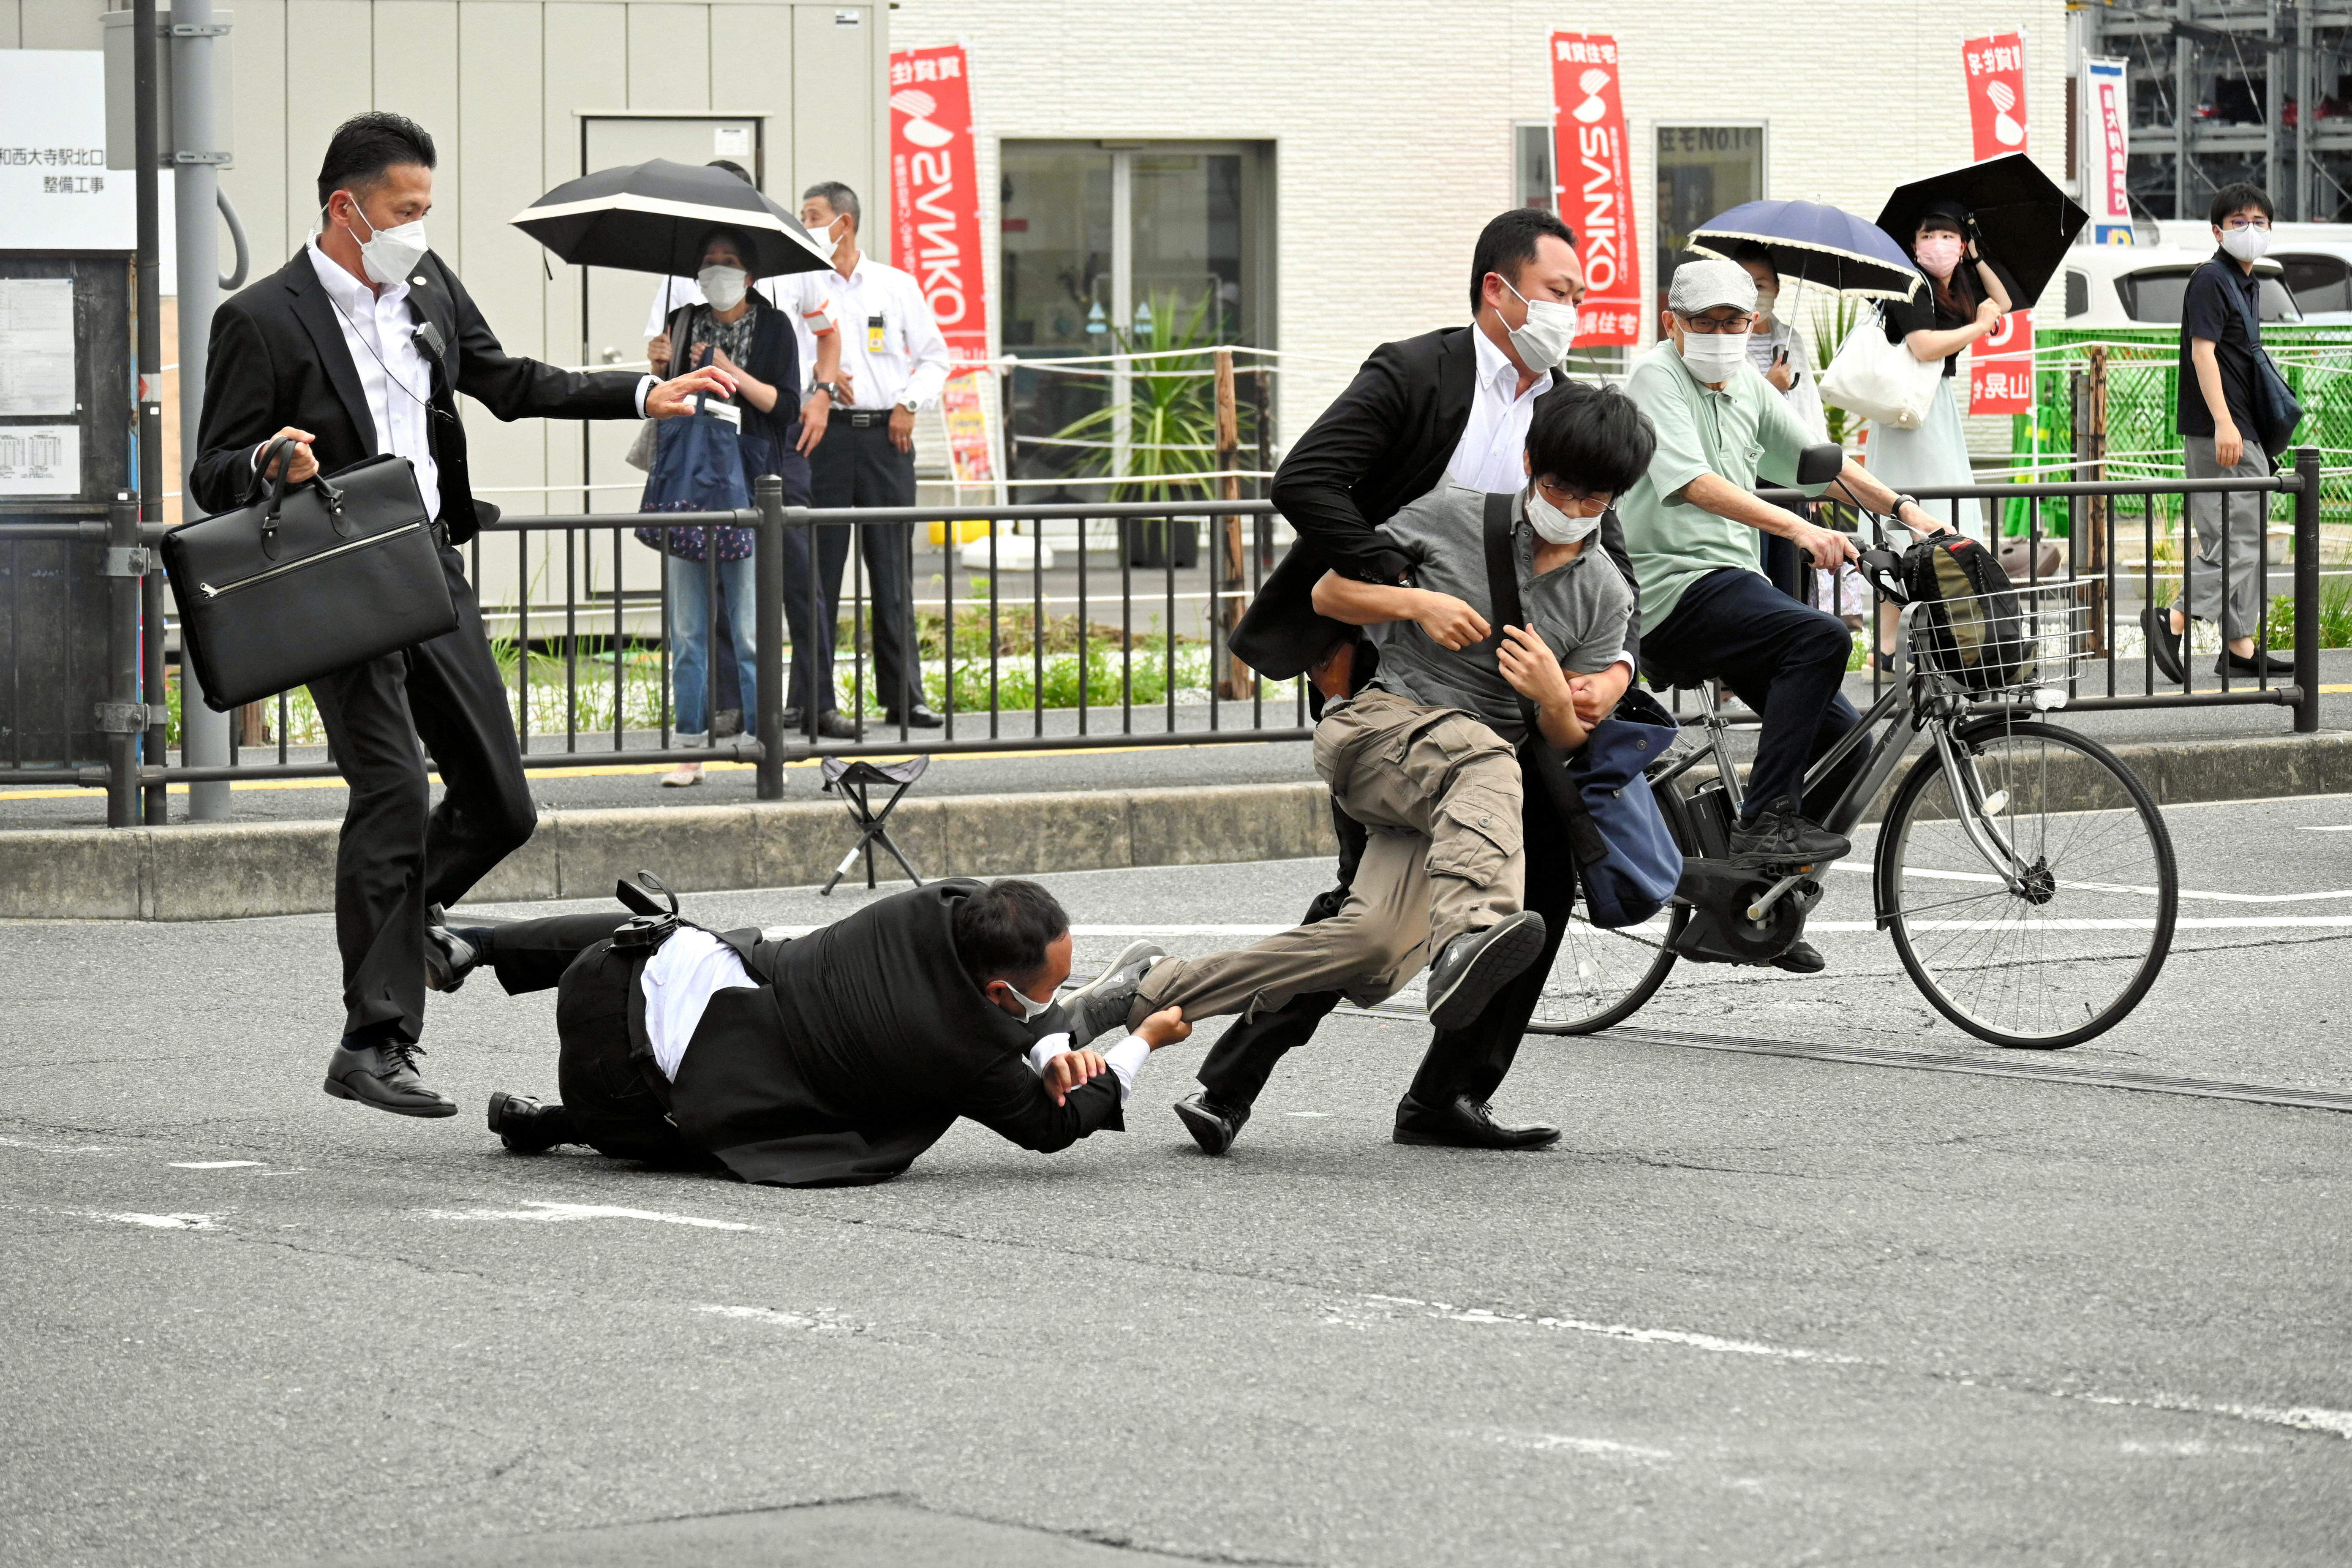 Asesinan al Ex Primer Ministro de Japón  44RY7WXULHUS4CIX63ENSNMBZM